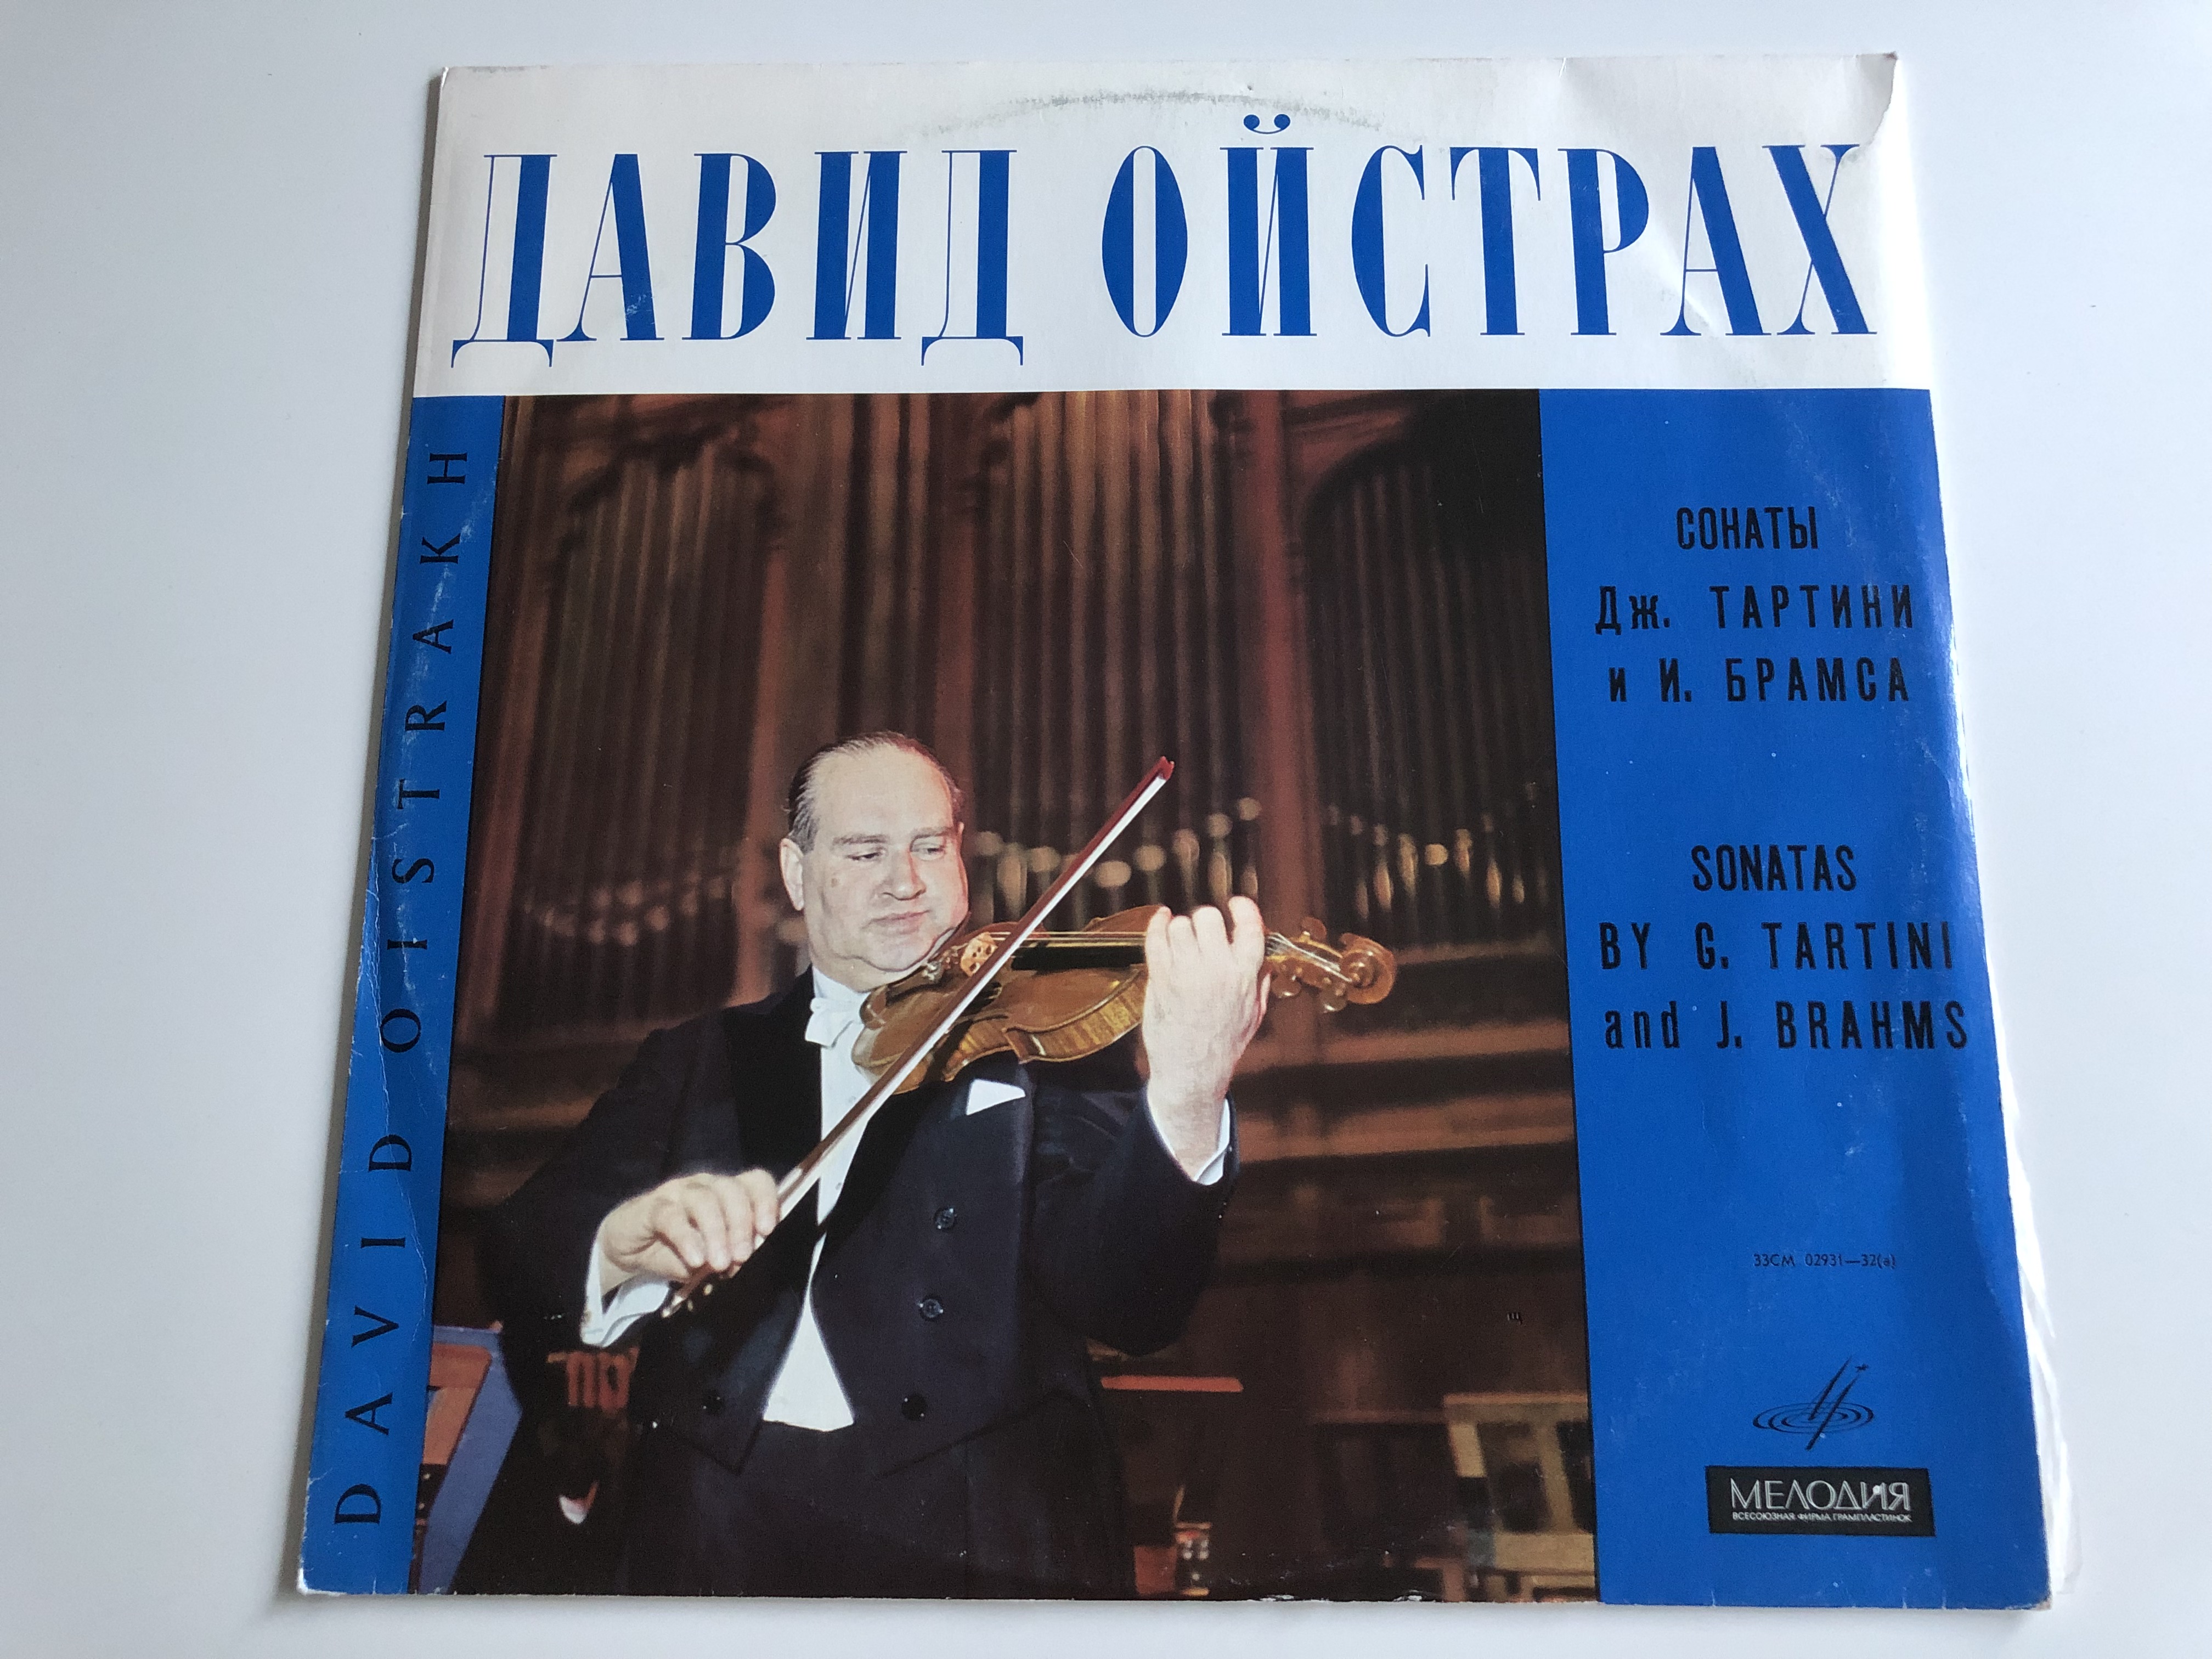 david-oistrakh-sonatas-by-g.-tartini-and-j.-brahms-frieda-bauer-sonatas-for-violin-and-piano-lp-33cm-02931-32-a-1-.jpg